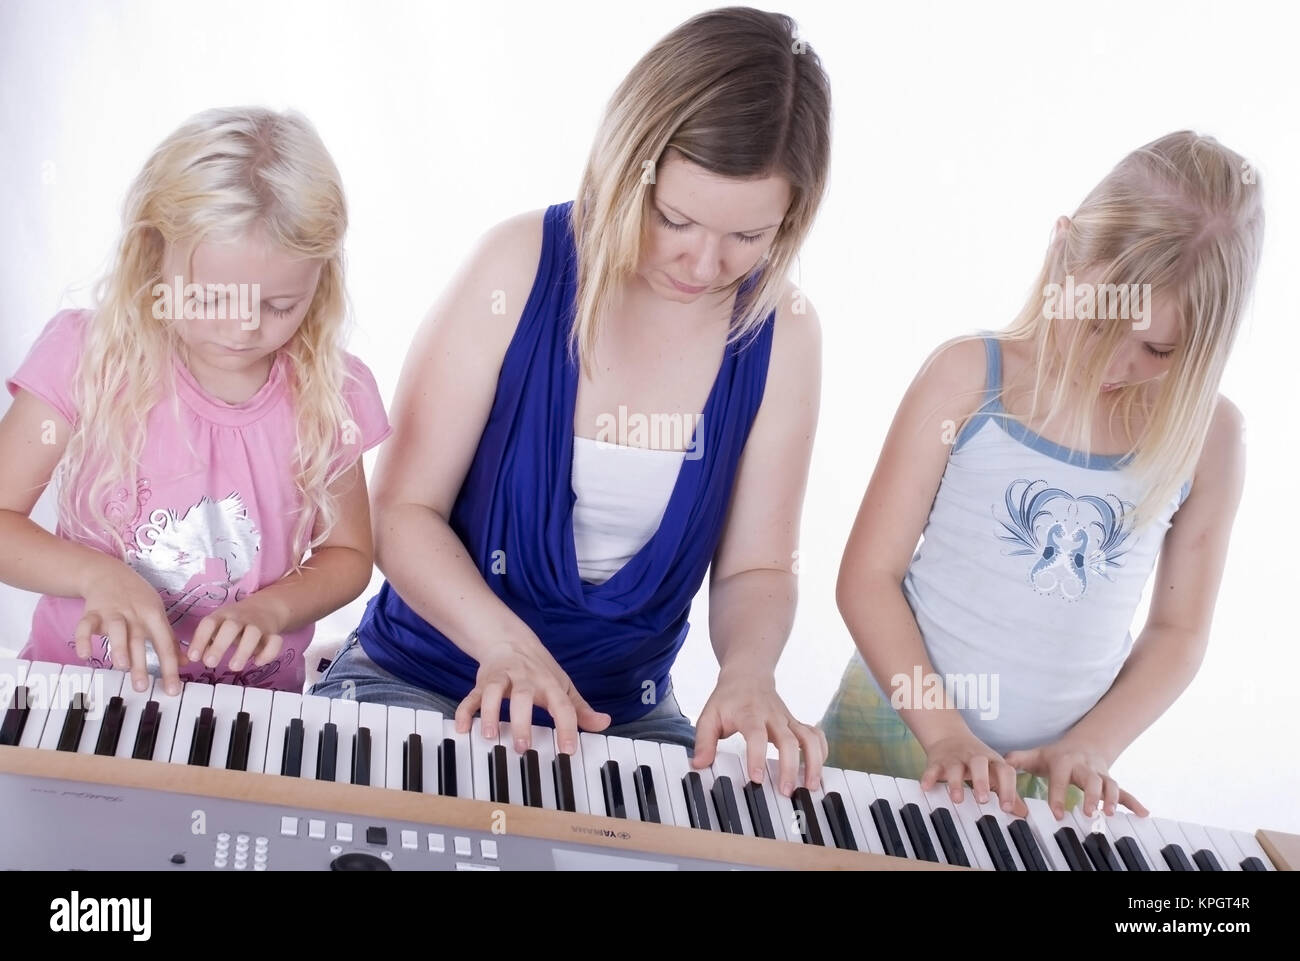 https://c8.alamy.com/comp/KPGT4R/model-released-frau-und-kinder-7-spielen-am-keyboard-woman-and-children-KPGT4R.jpg